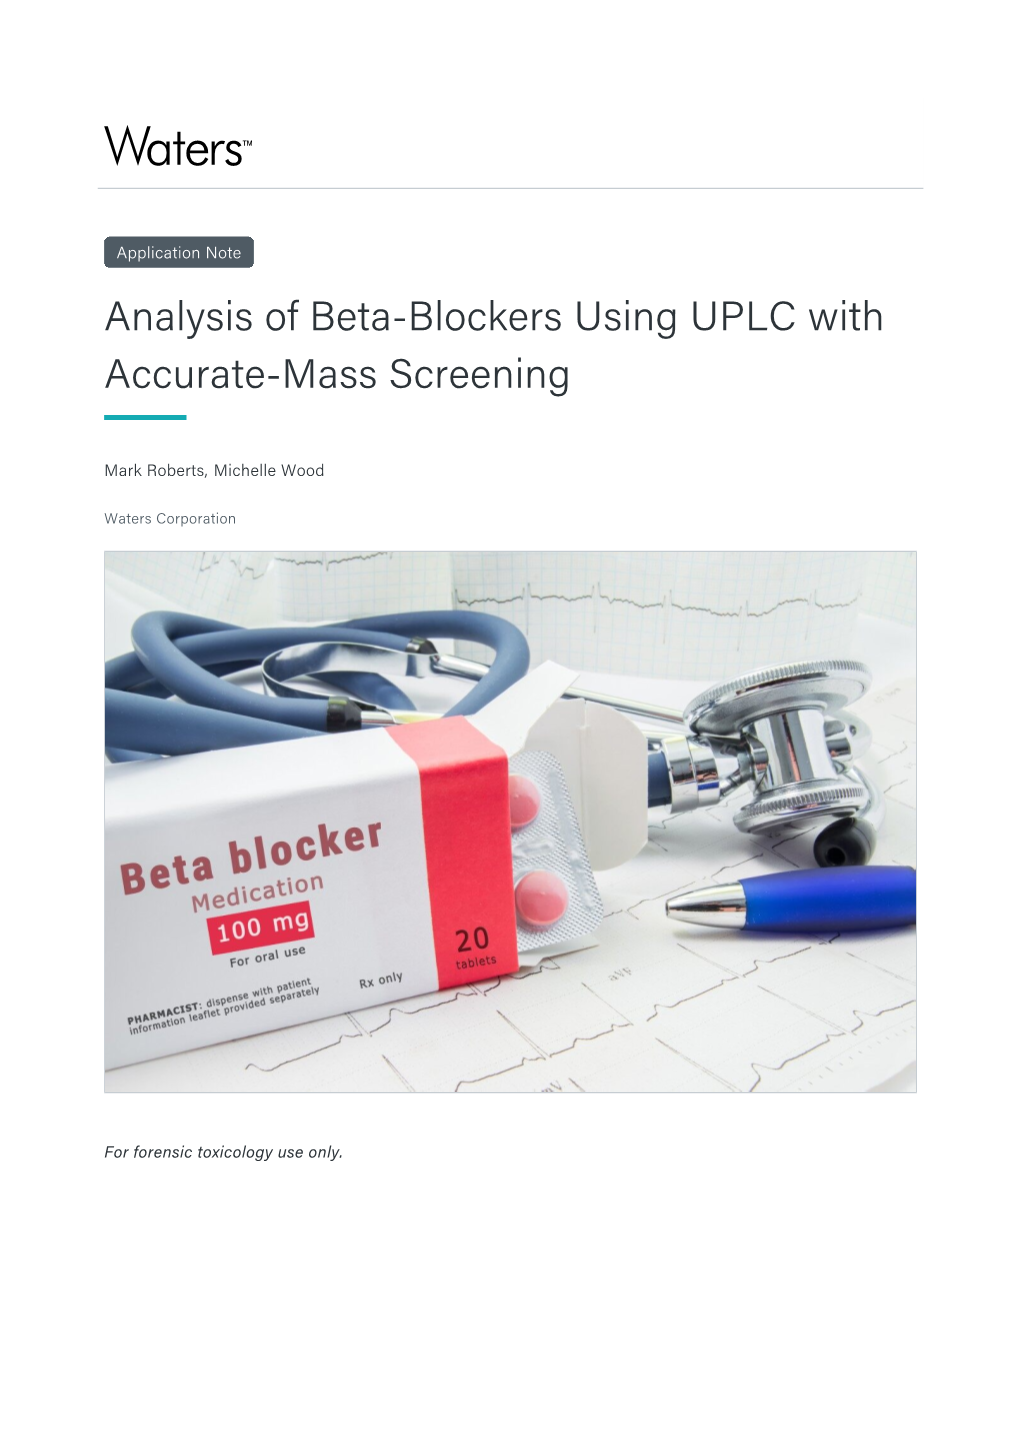 Analysis of Beta-Blockers Using UPLC with Accurate-Mass Screening